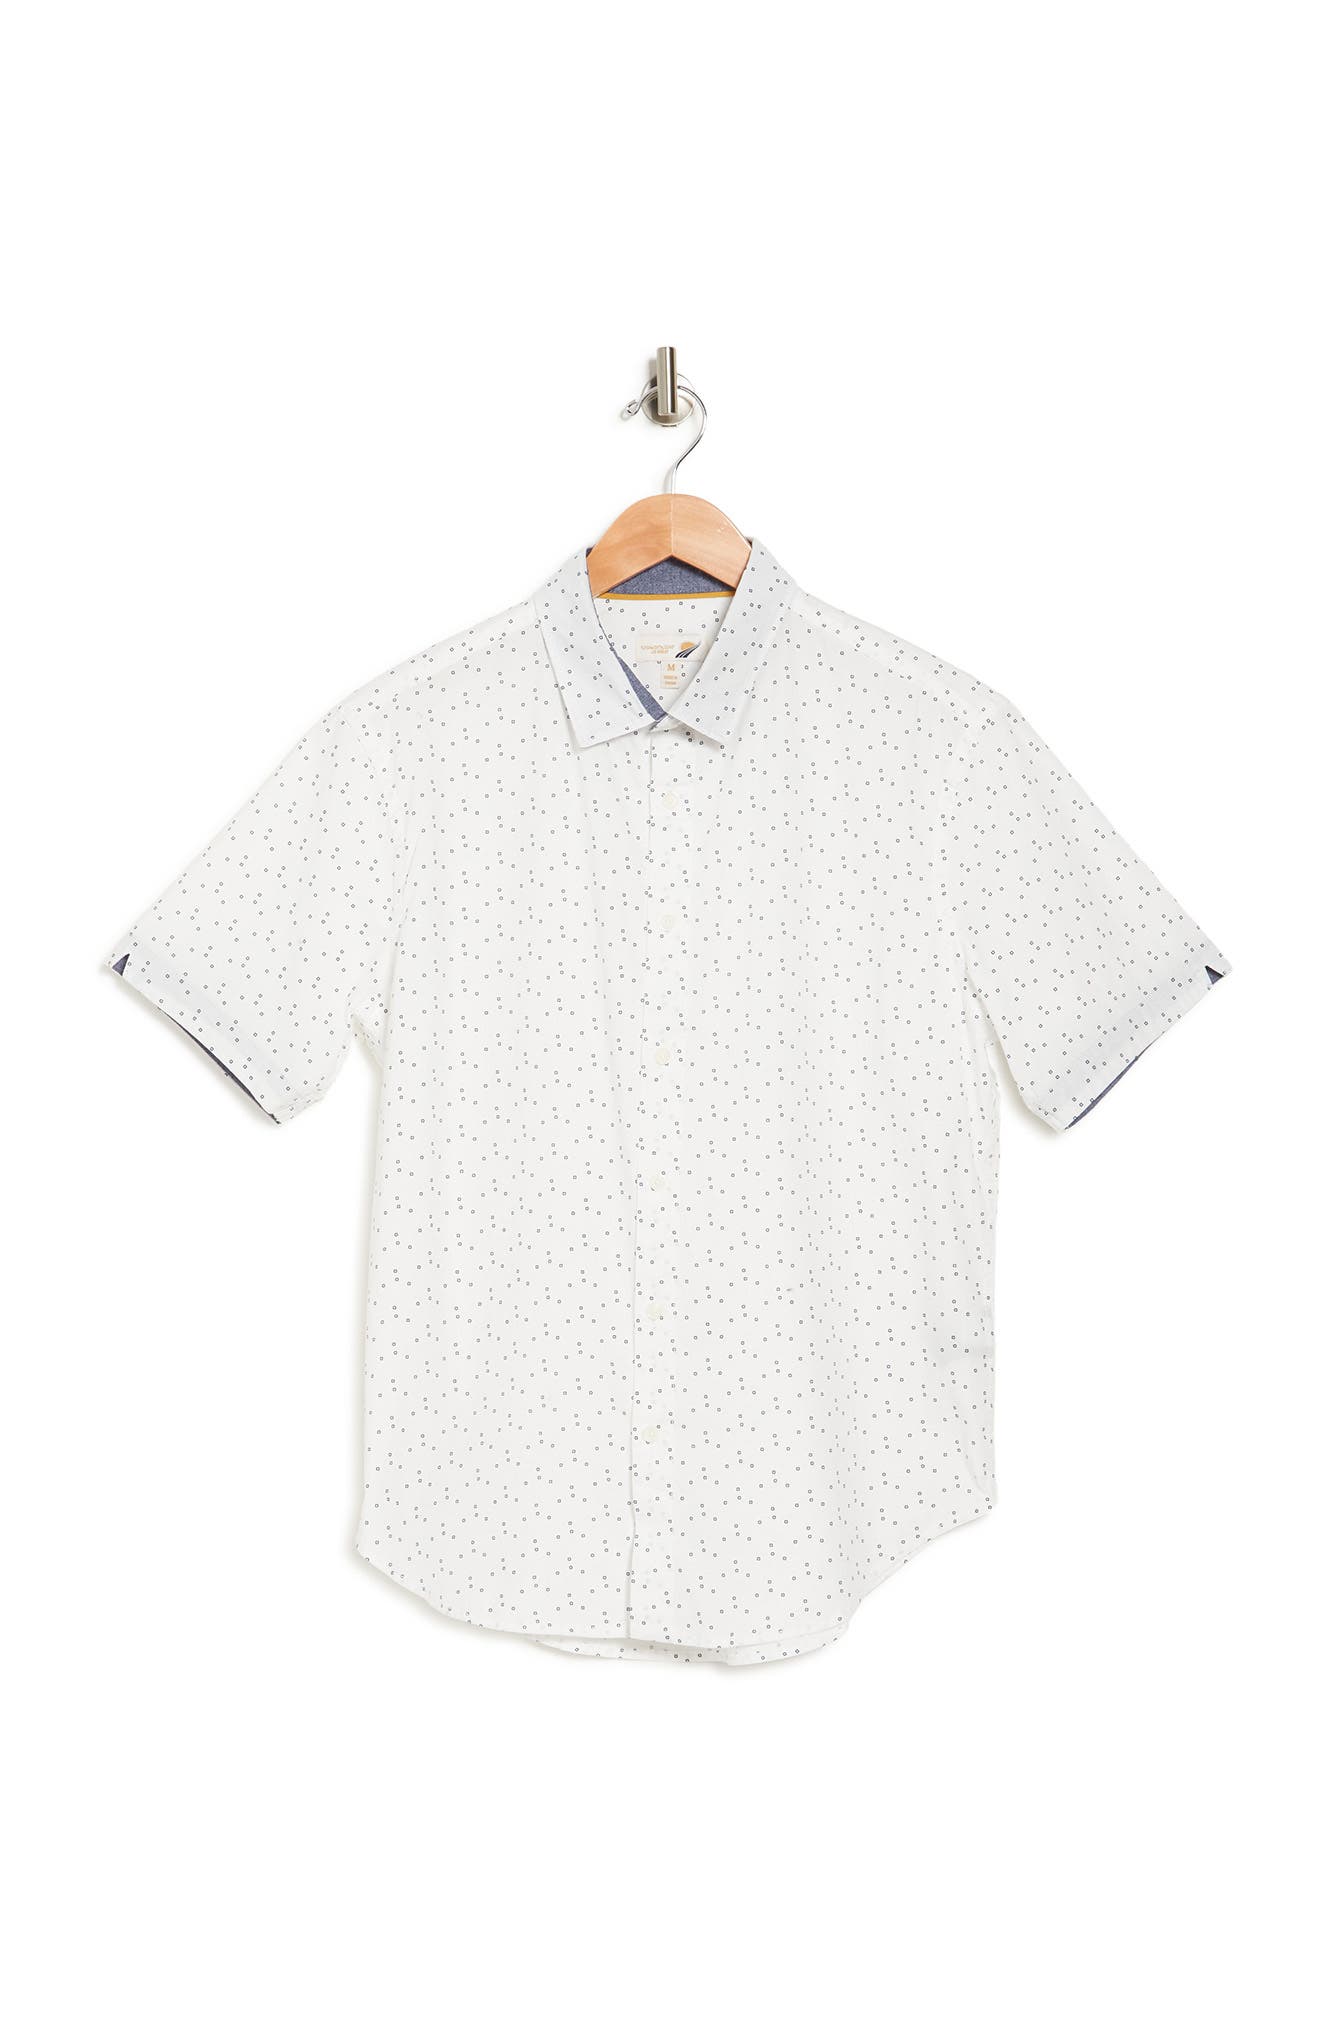 Fundamental Coast Morningside Short Sleeve Shirt In White